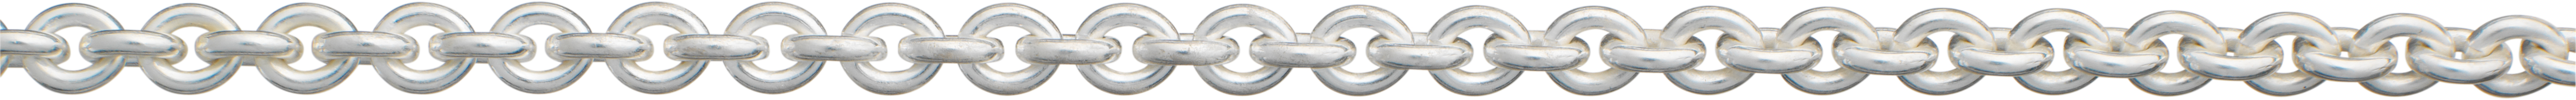 ankerketting rond zilver 925/- 3,90mm, draad dikte 1,00mm